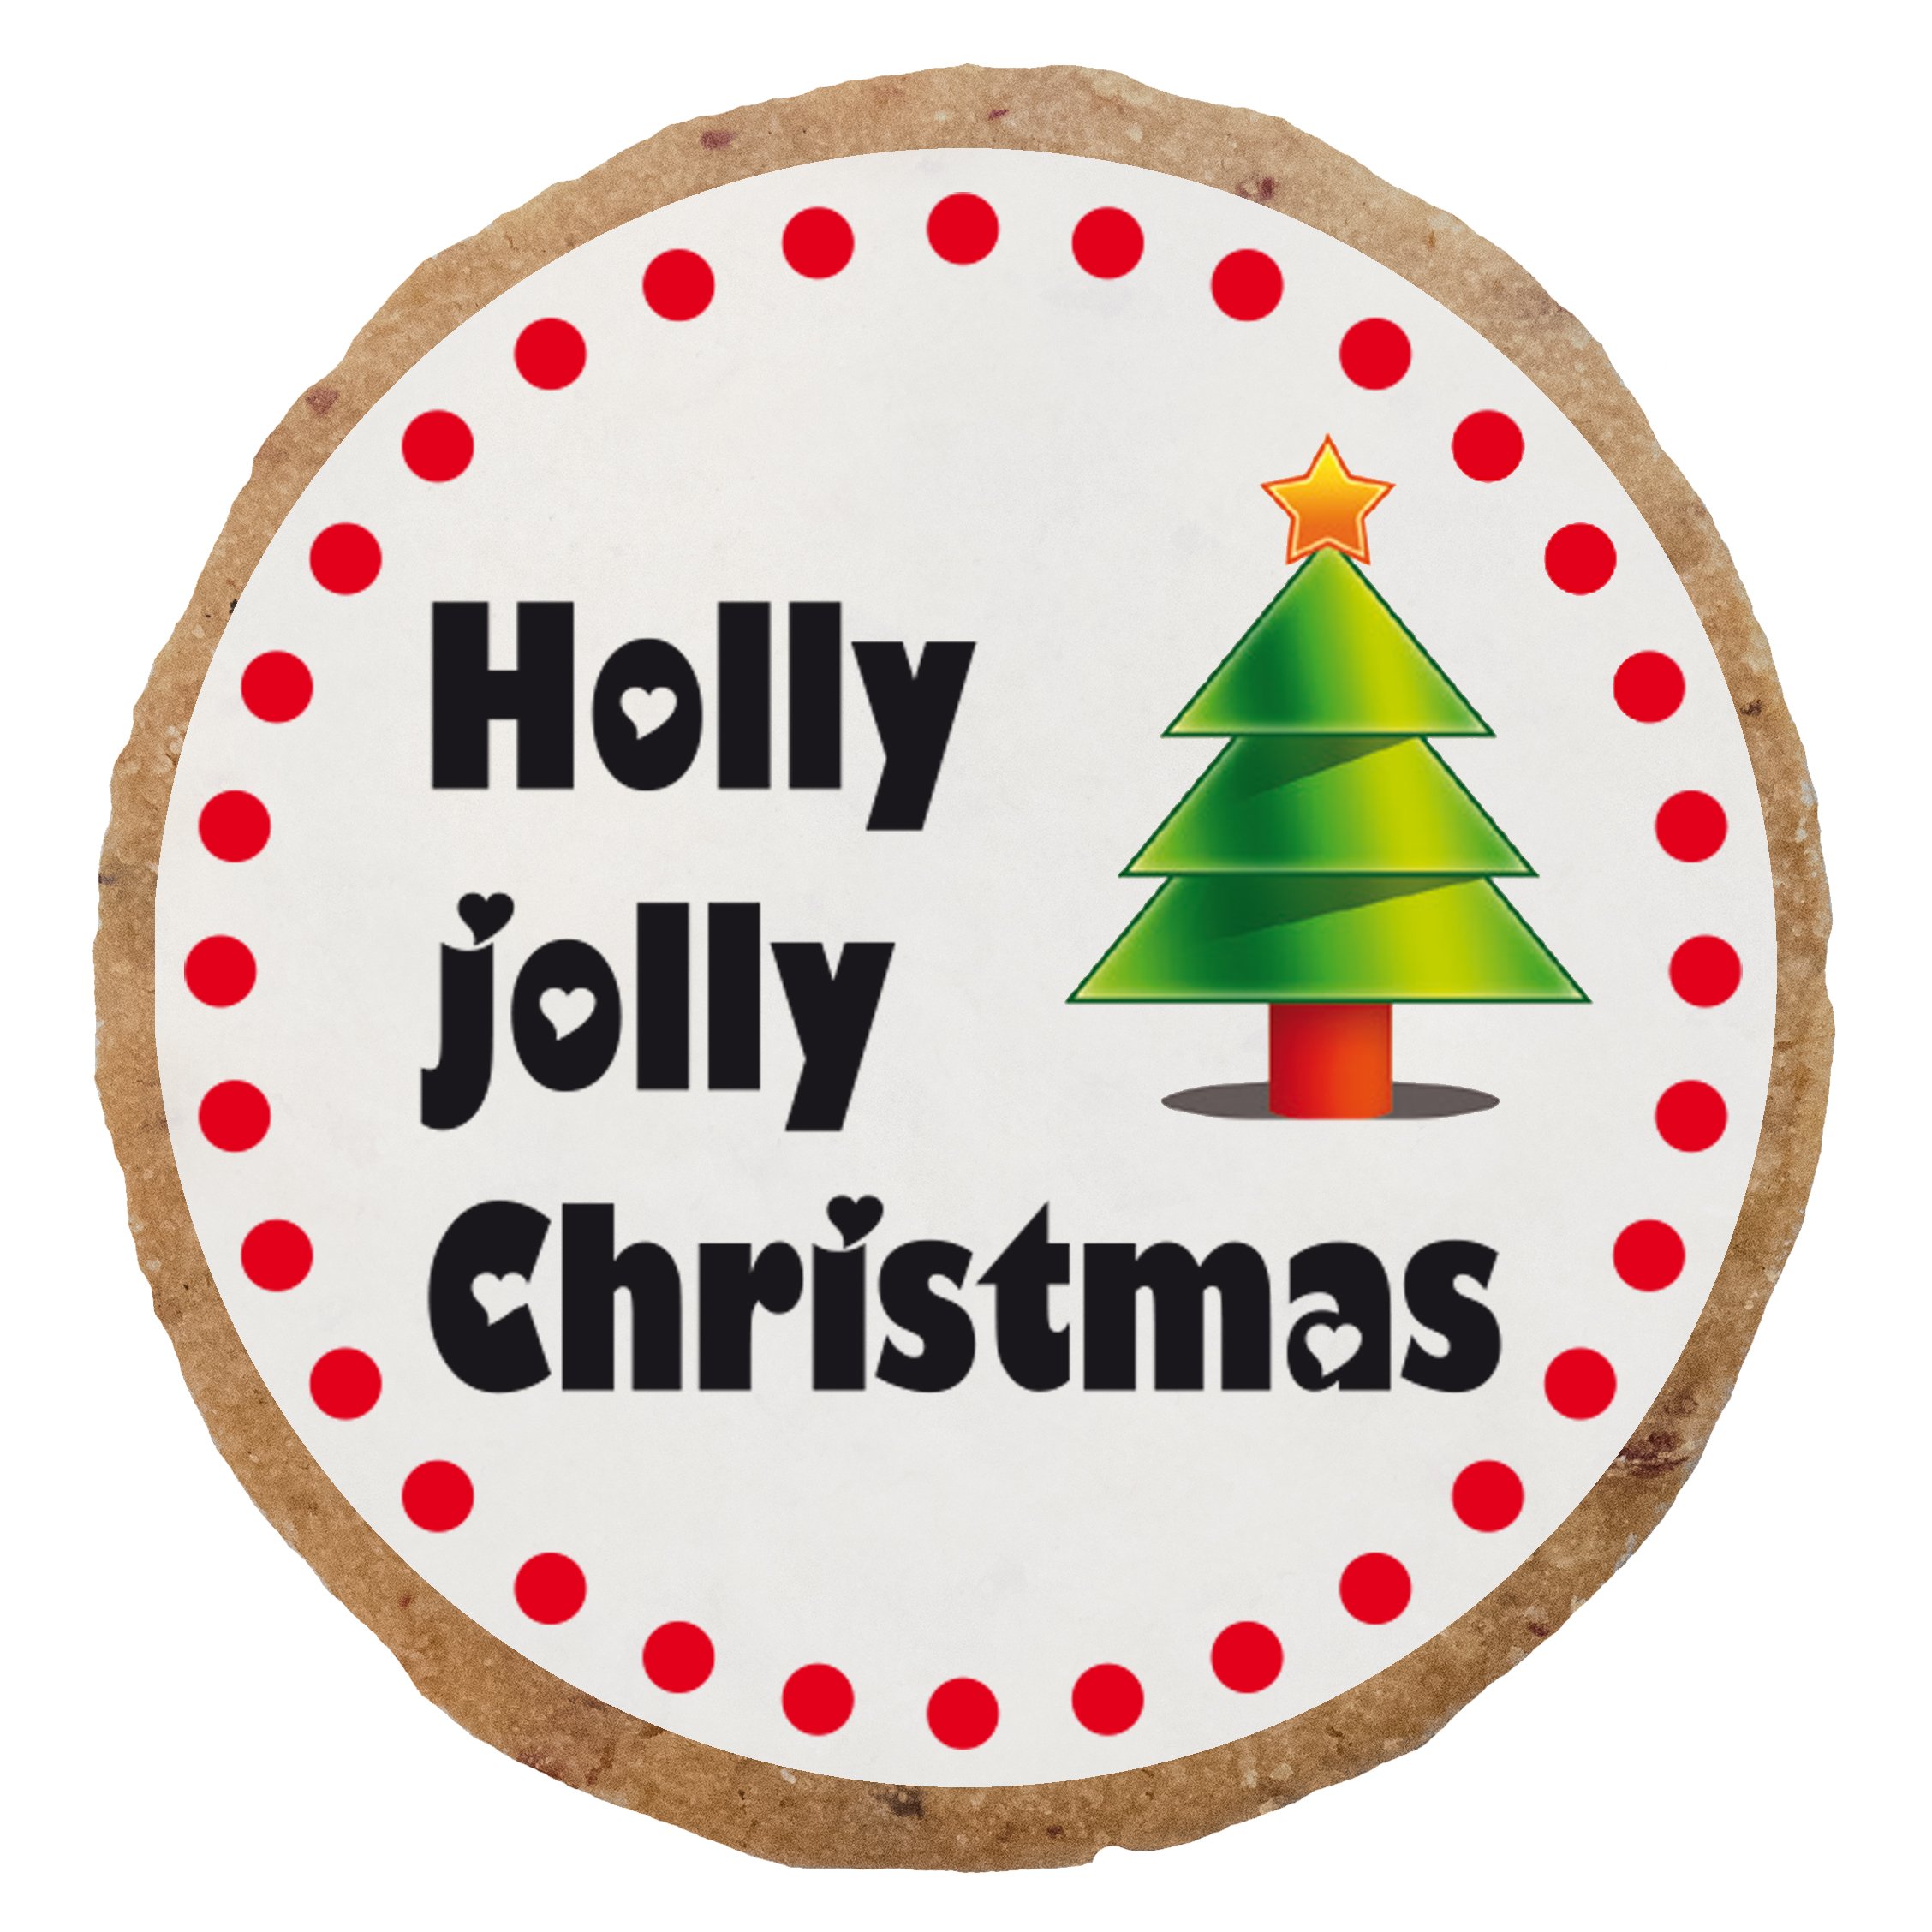 "Holly jolly Christmas" MotivKEKS